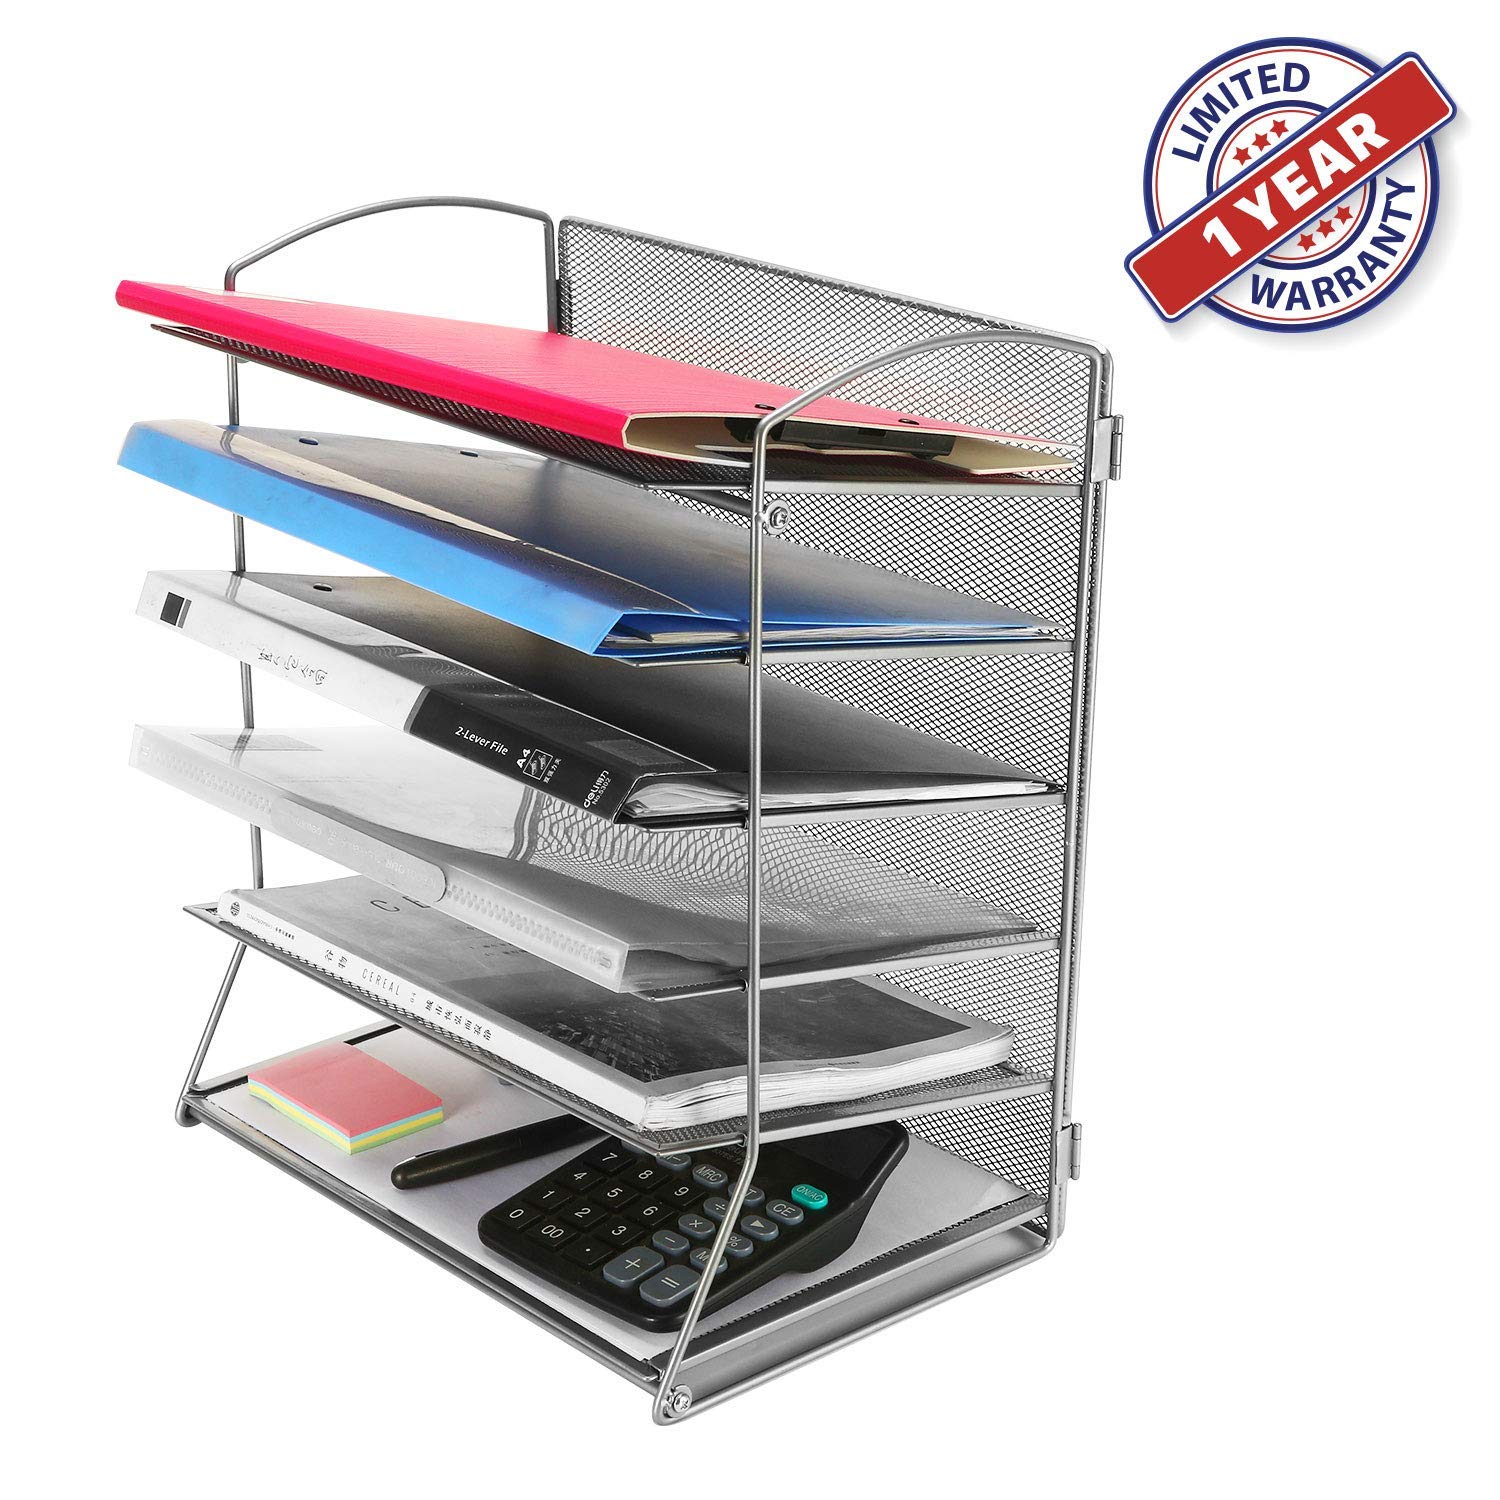 CLATINA 6-Tier Metal Mesh Desk File Organizer Desktop Letter Tray Paper Document Holder for Office Home School 2 Pack